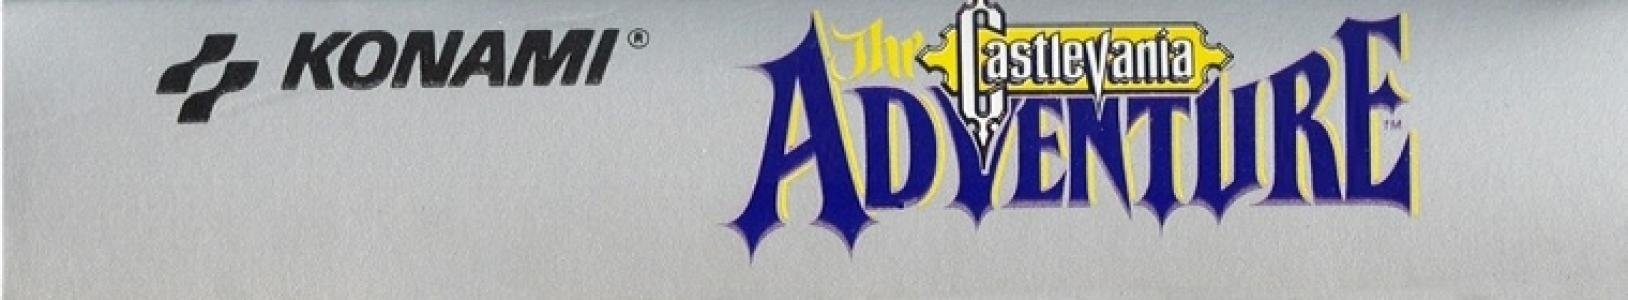 Castlevania: The Adventure banner